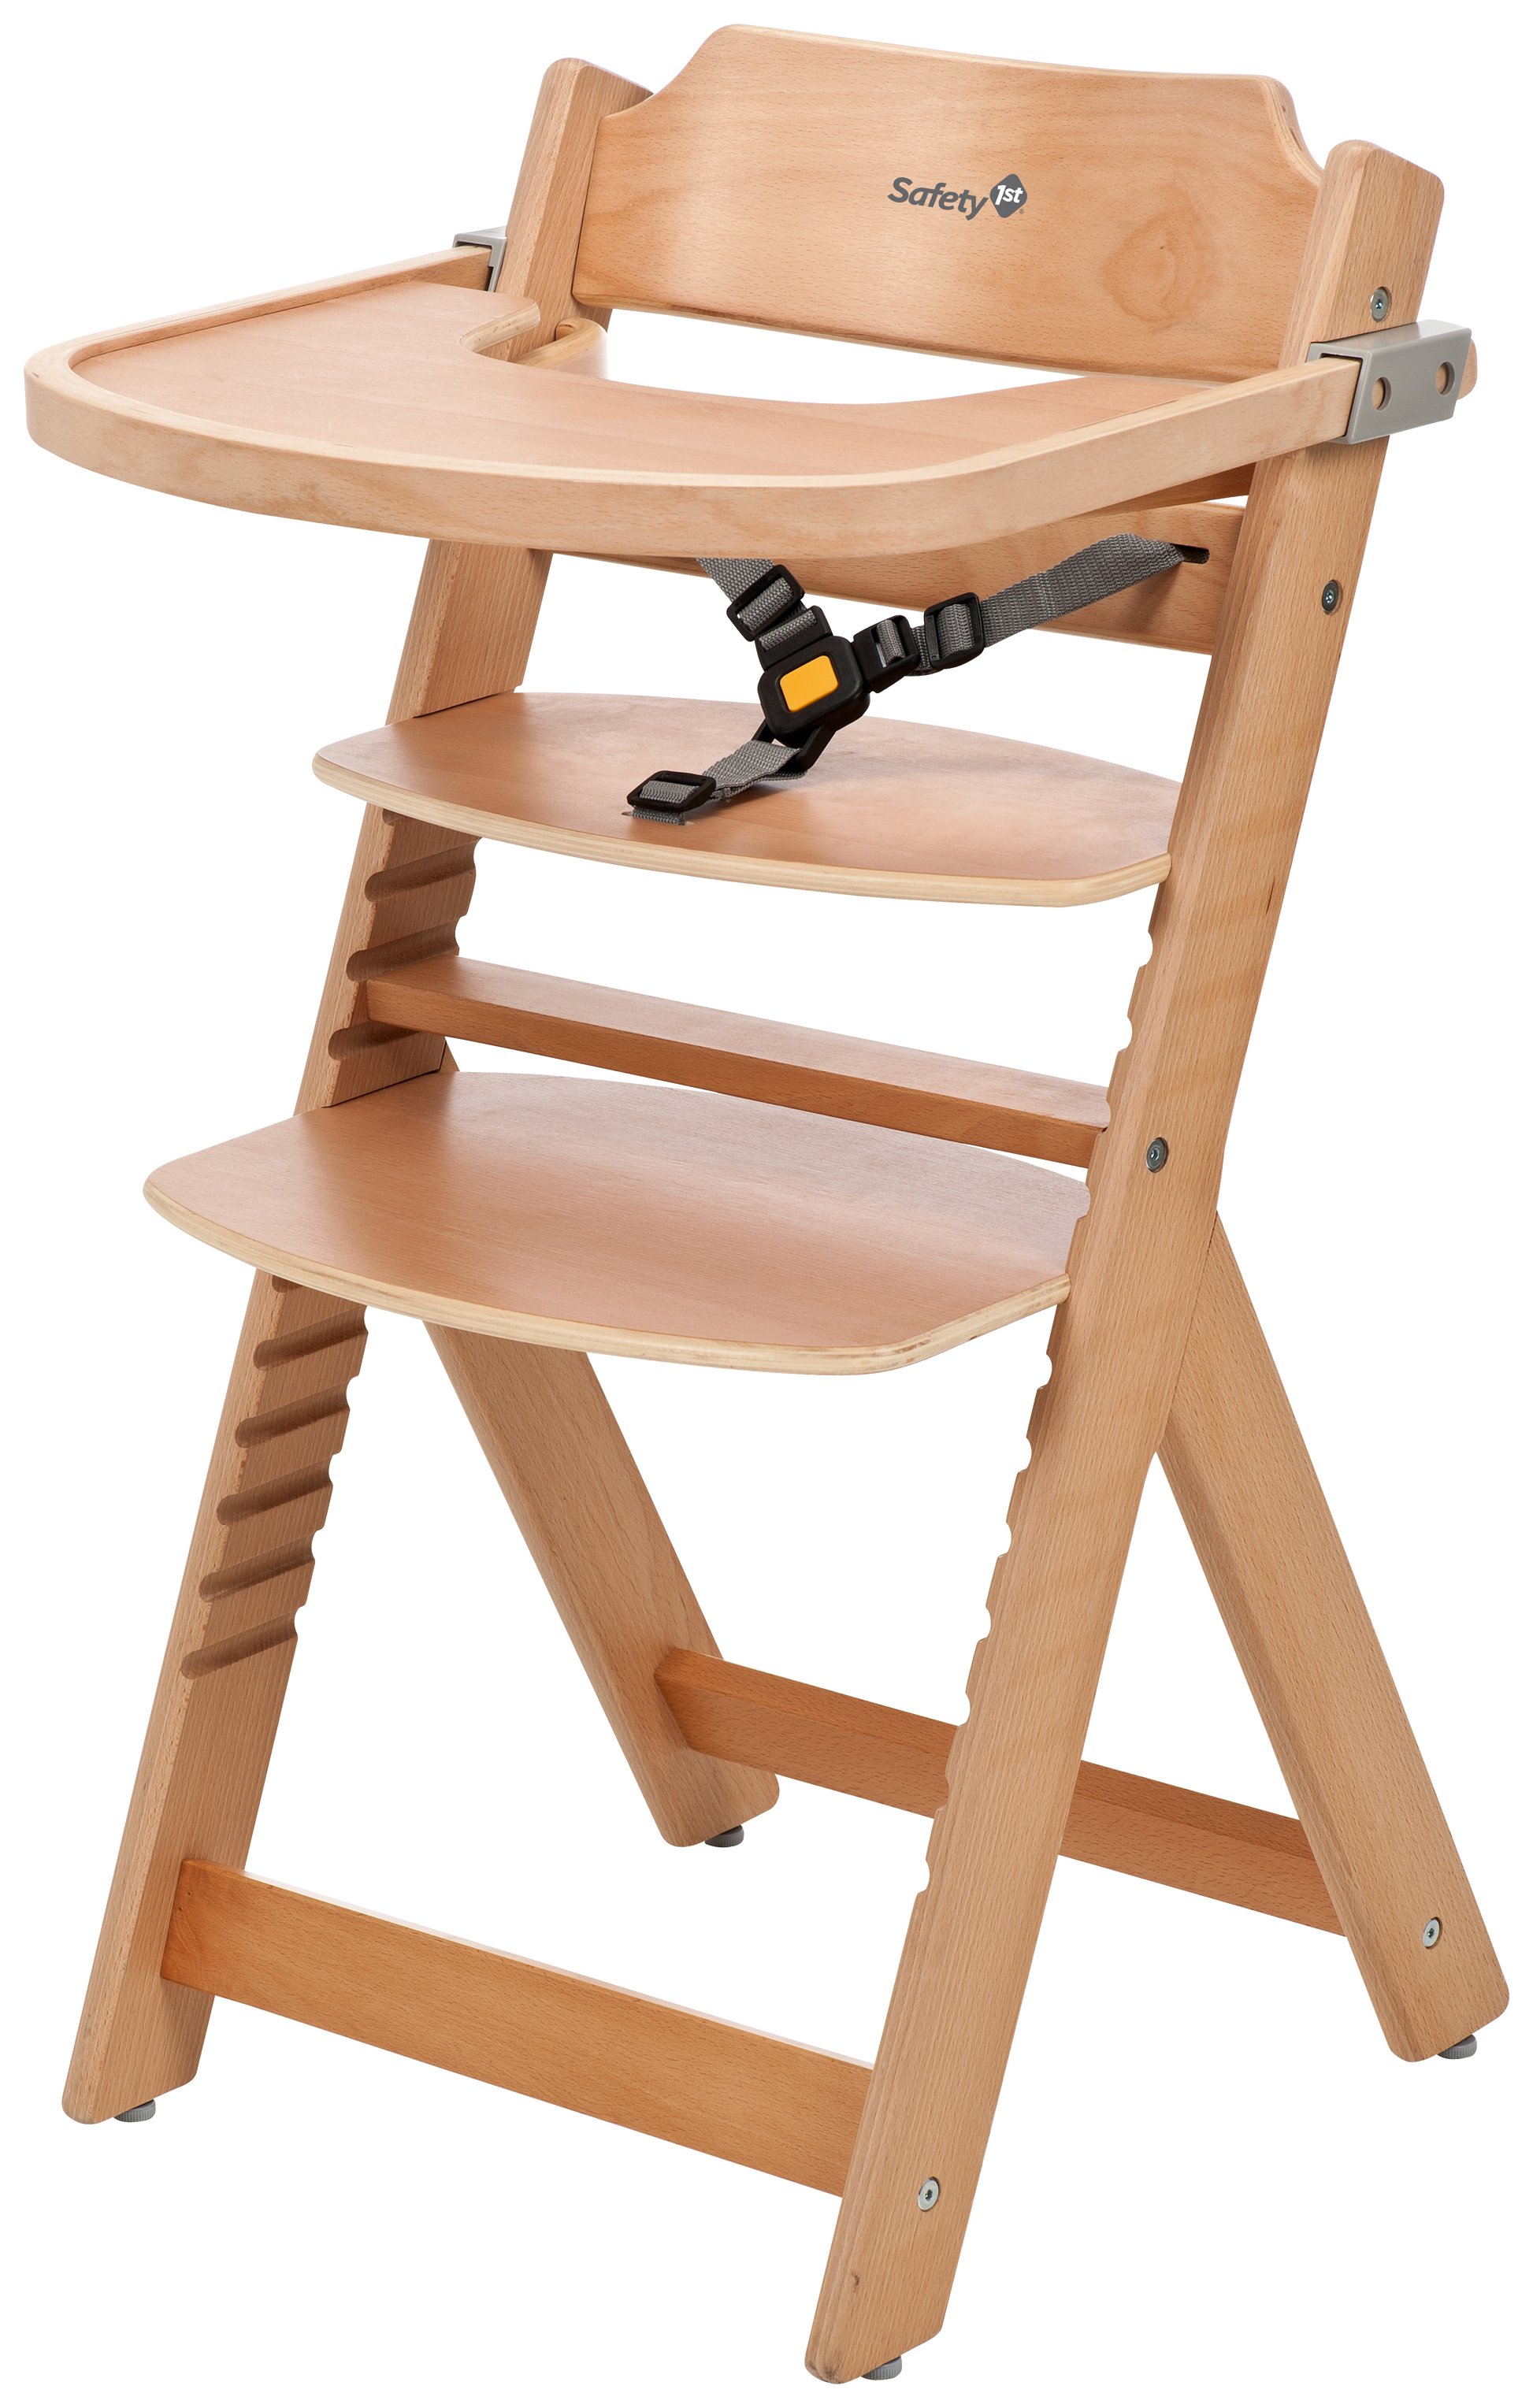 argos wooden high chair